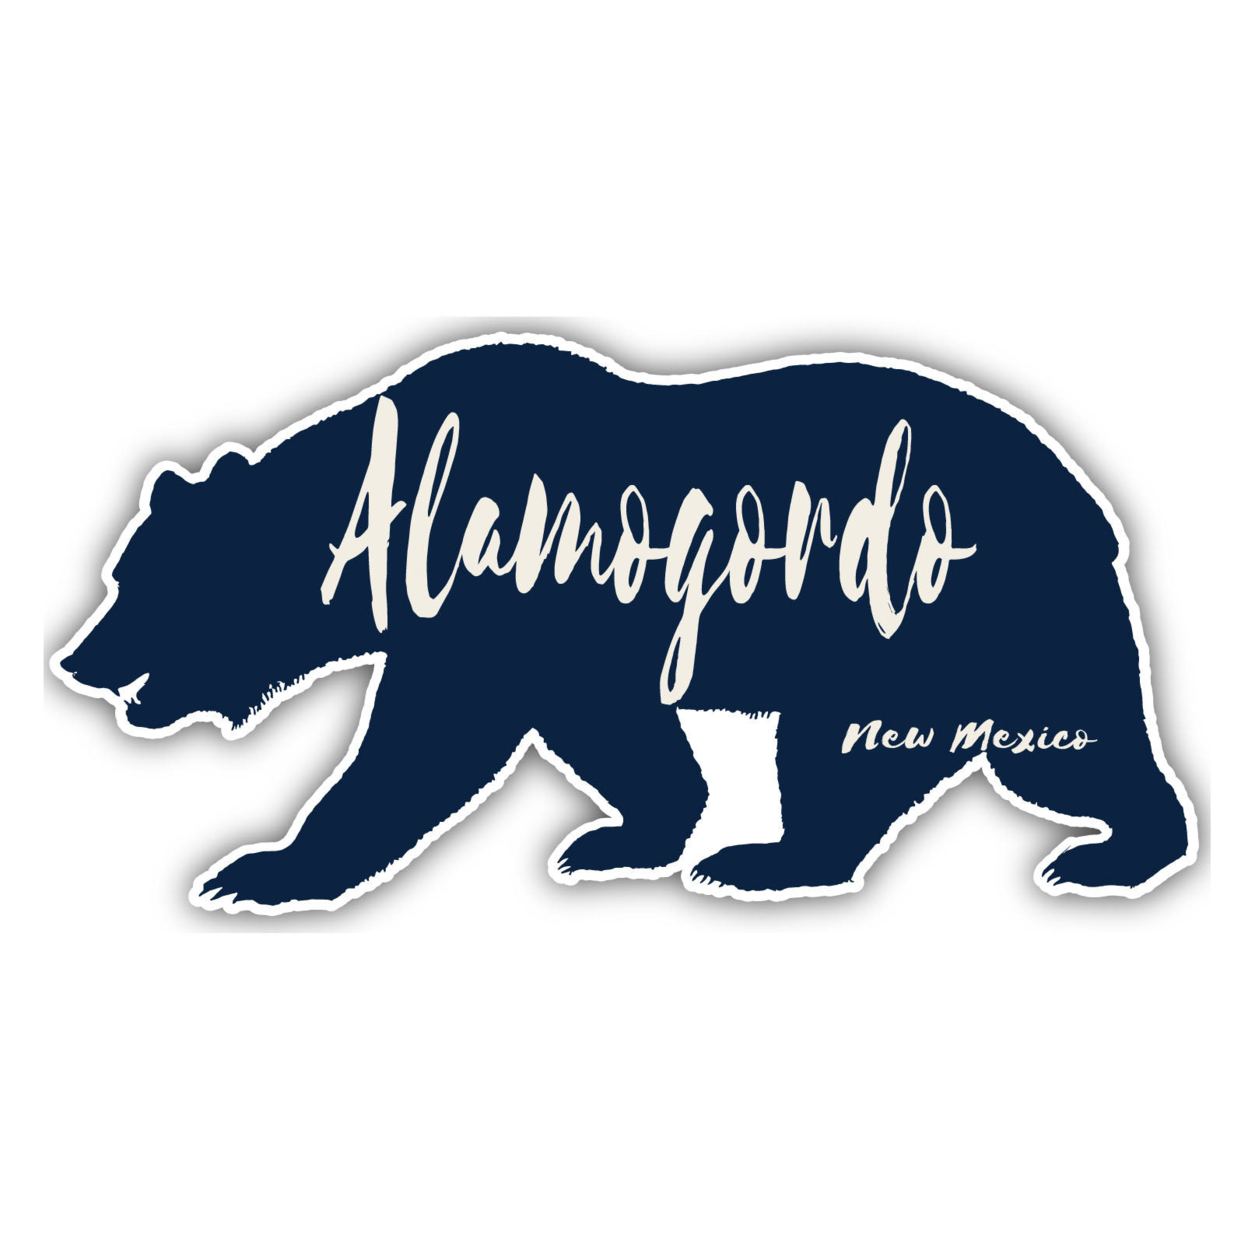 Alamogordo New Mexico Souvenir Decorative Stickers (Choose Theme And Size) - 4-Pack, 4-Inch, Bear